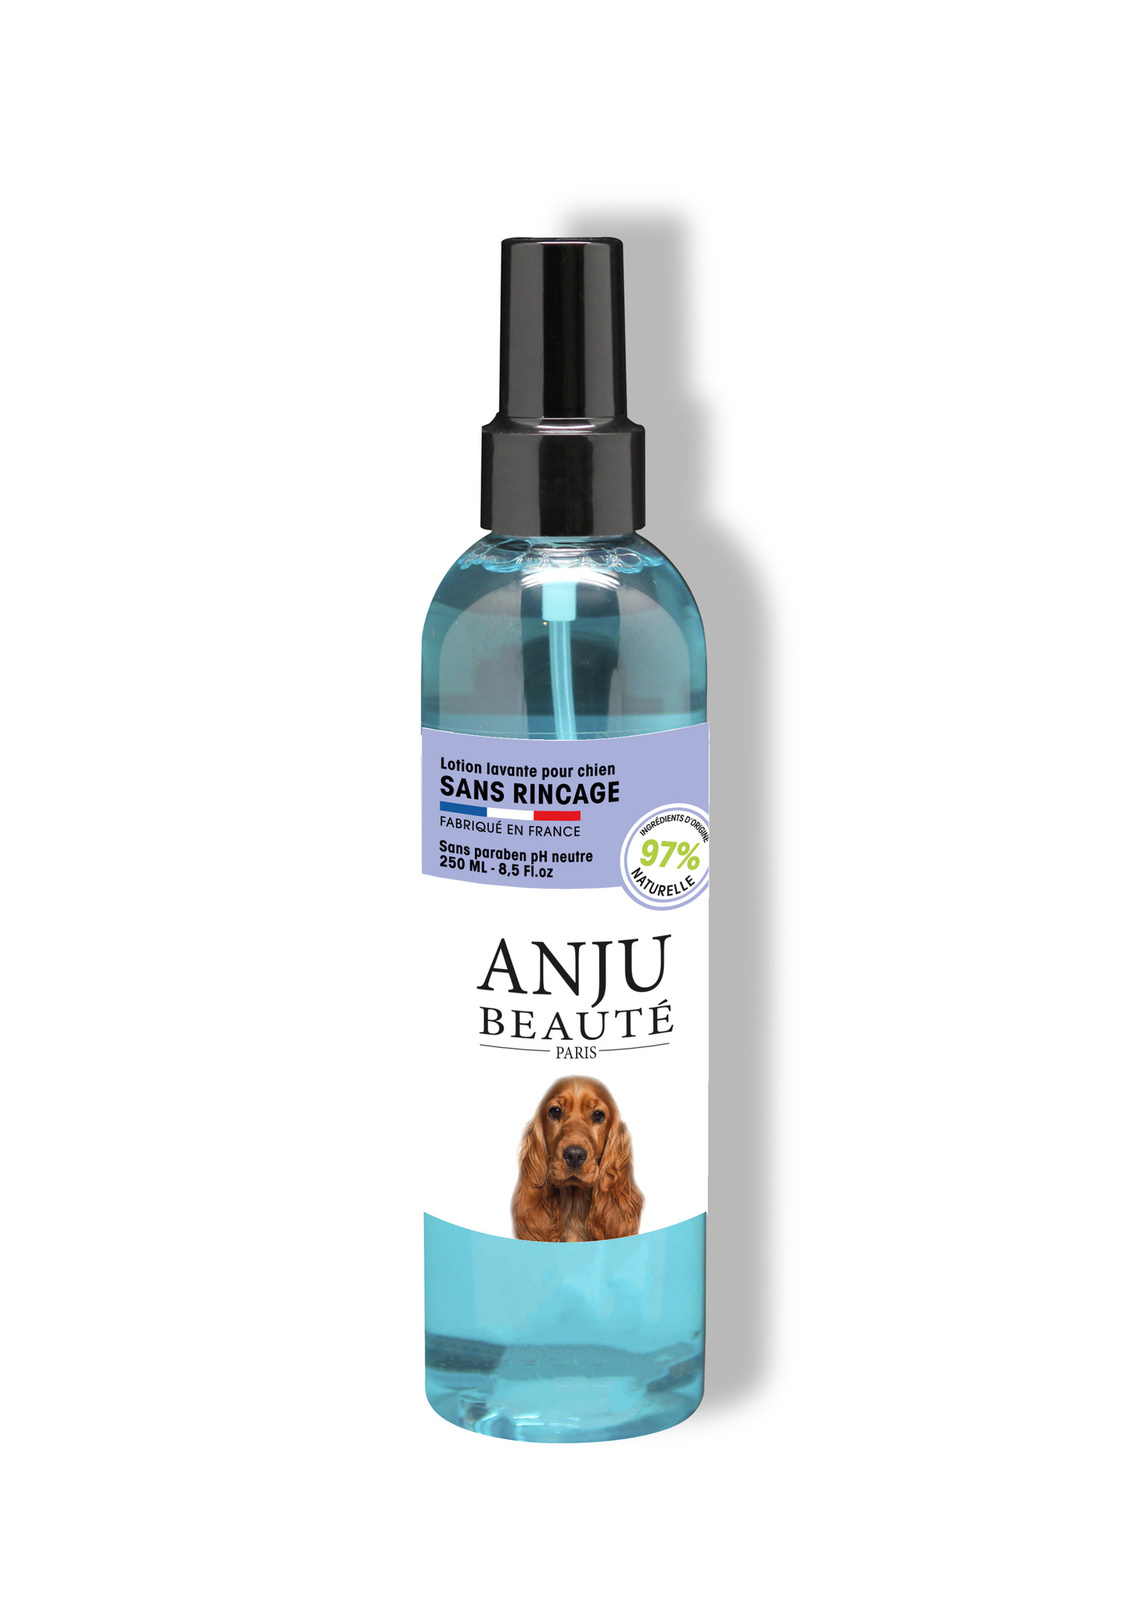 Anju Beaute спрей для собак очищающий без ополаскивания, 250 мл (250 г) Anju Beaute спрей для собак очищающий без ополаскивания, 250 мл (250 г) - фото 1